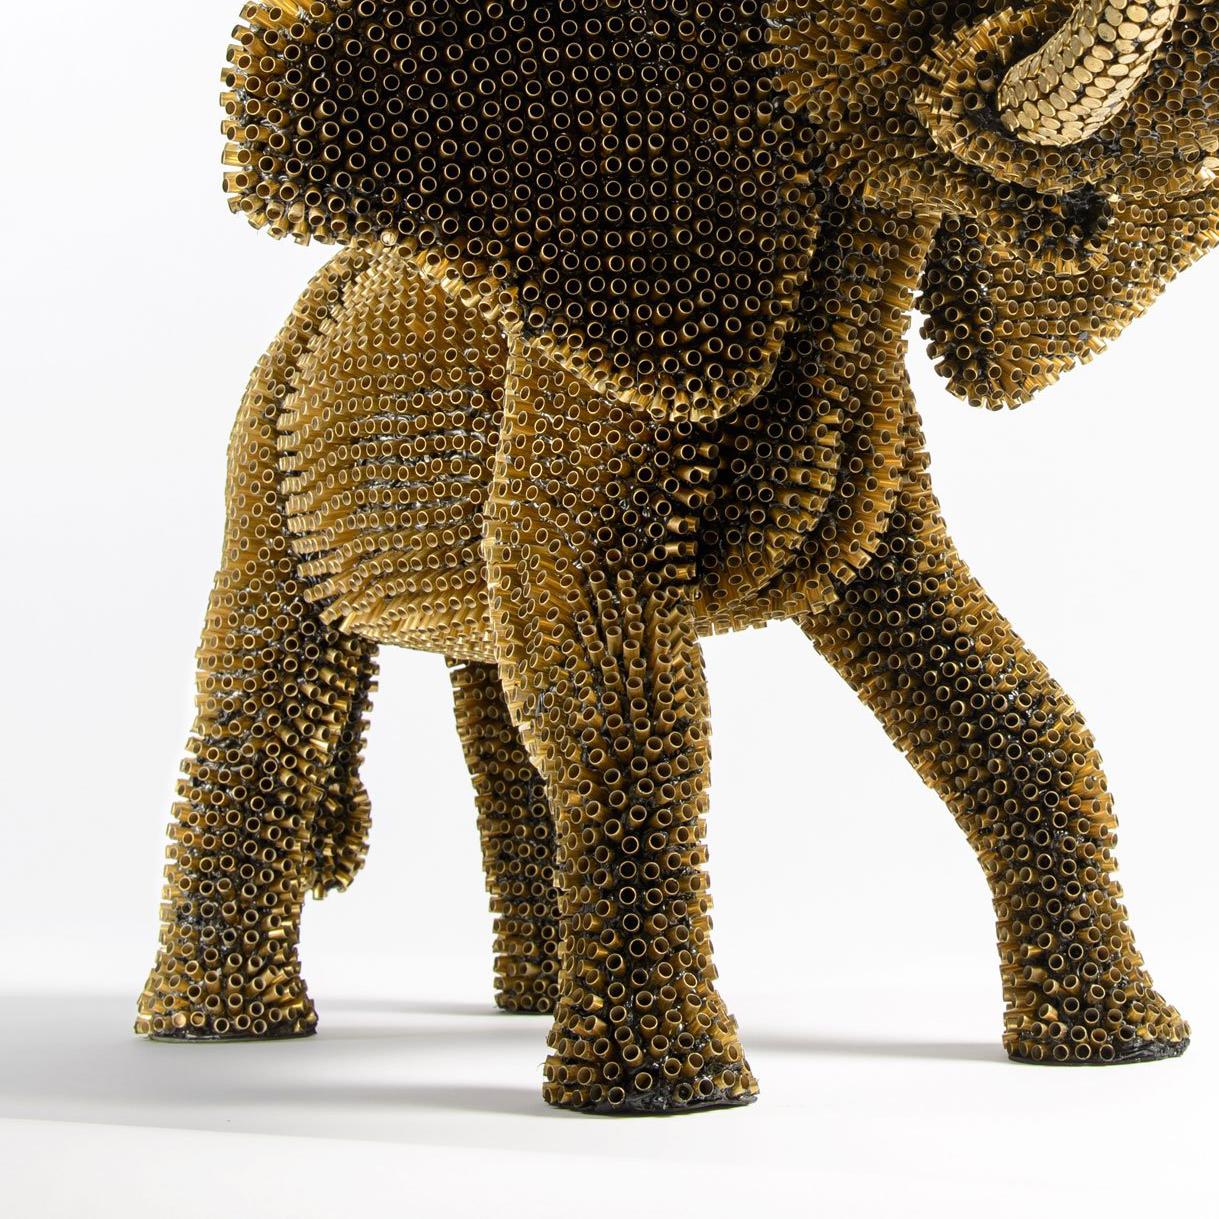 Elephant - Gray Figurative Sculpture by Sebiha Demir